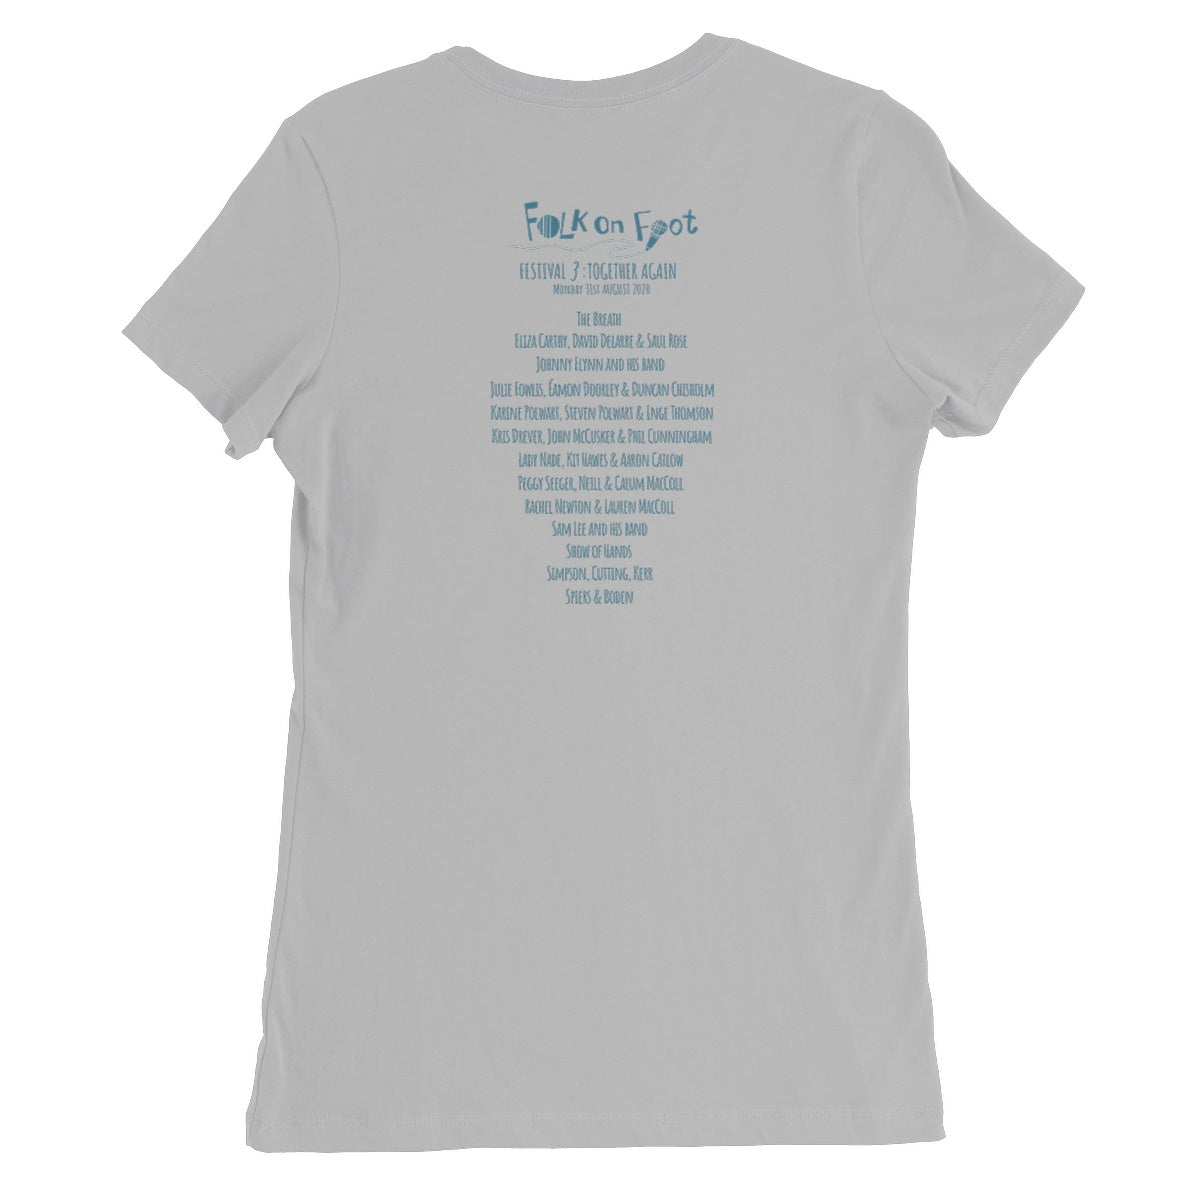 Folk on Foot 3 - Aug 2020 Women's T-Shirt